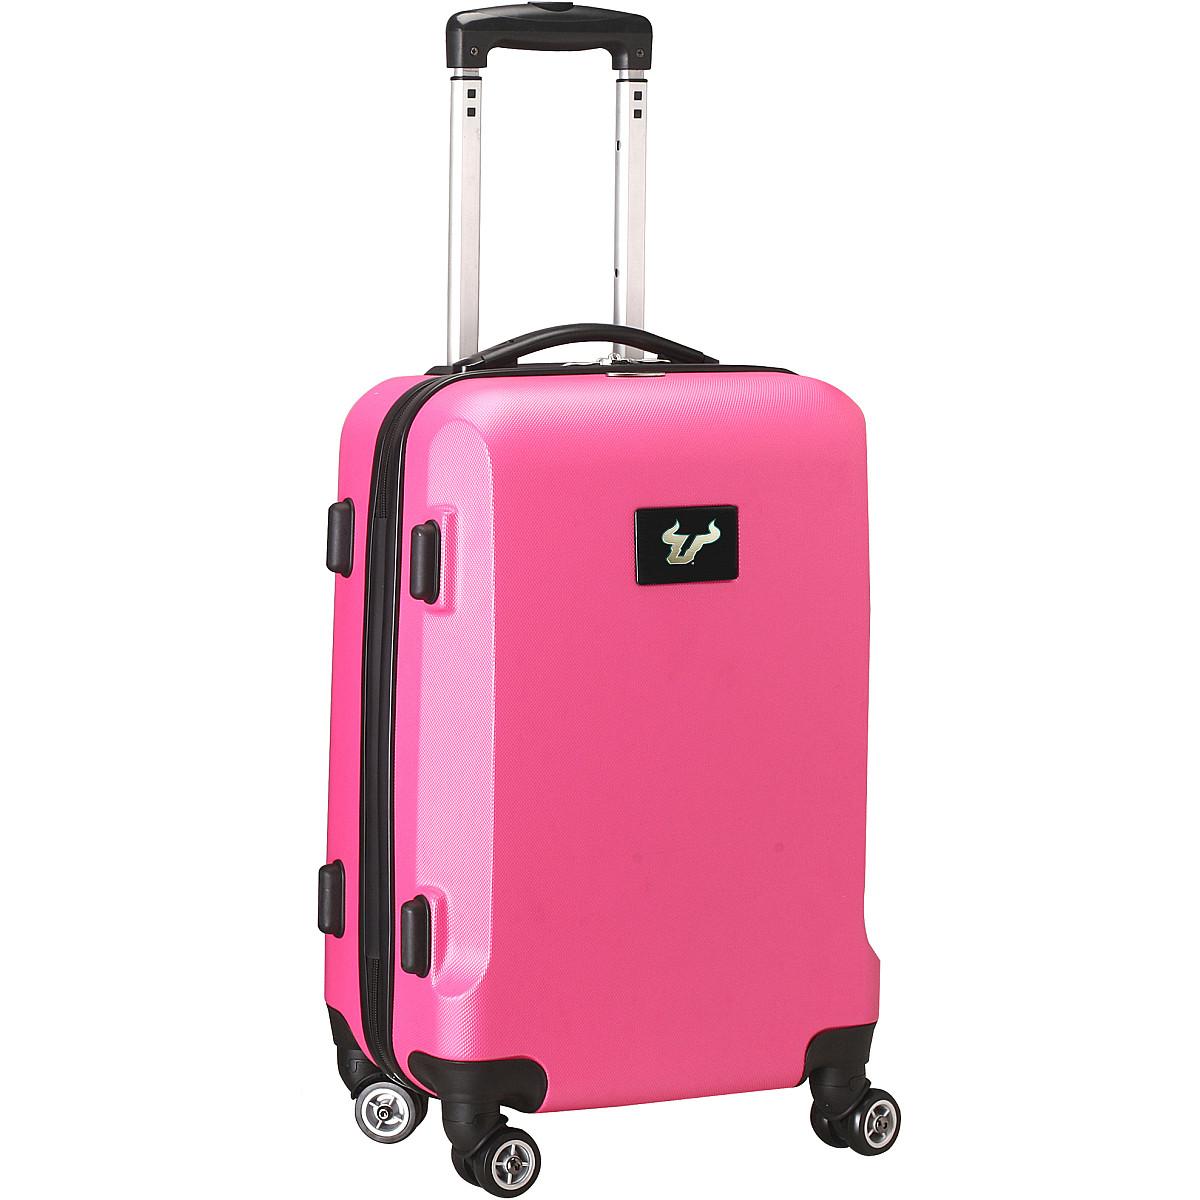 Denco Luggage Denco Sports Luggage University Of South Florida 20" Hardcase Domestic Carry-On Spinner